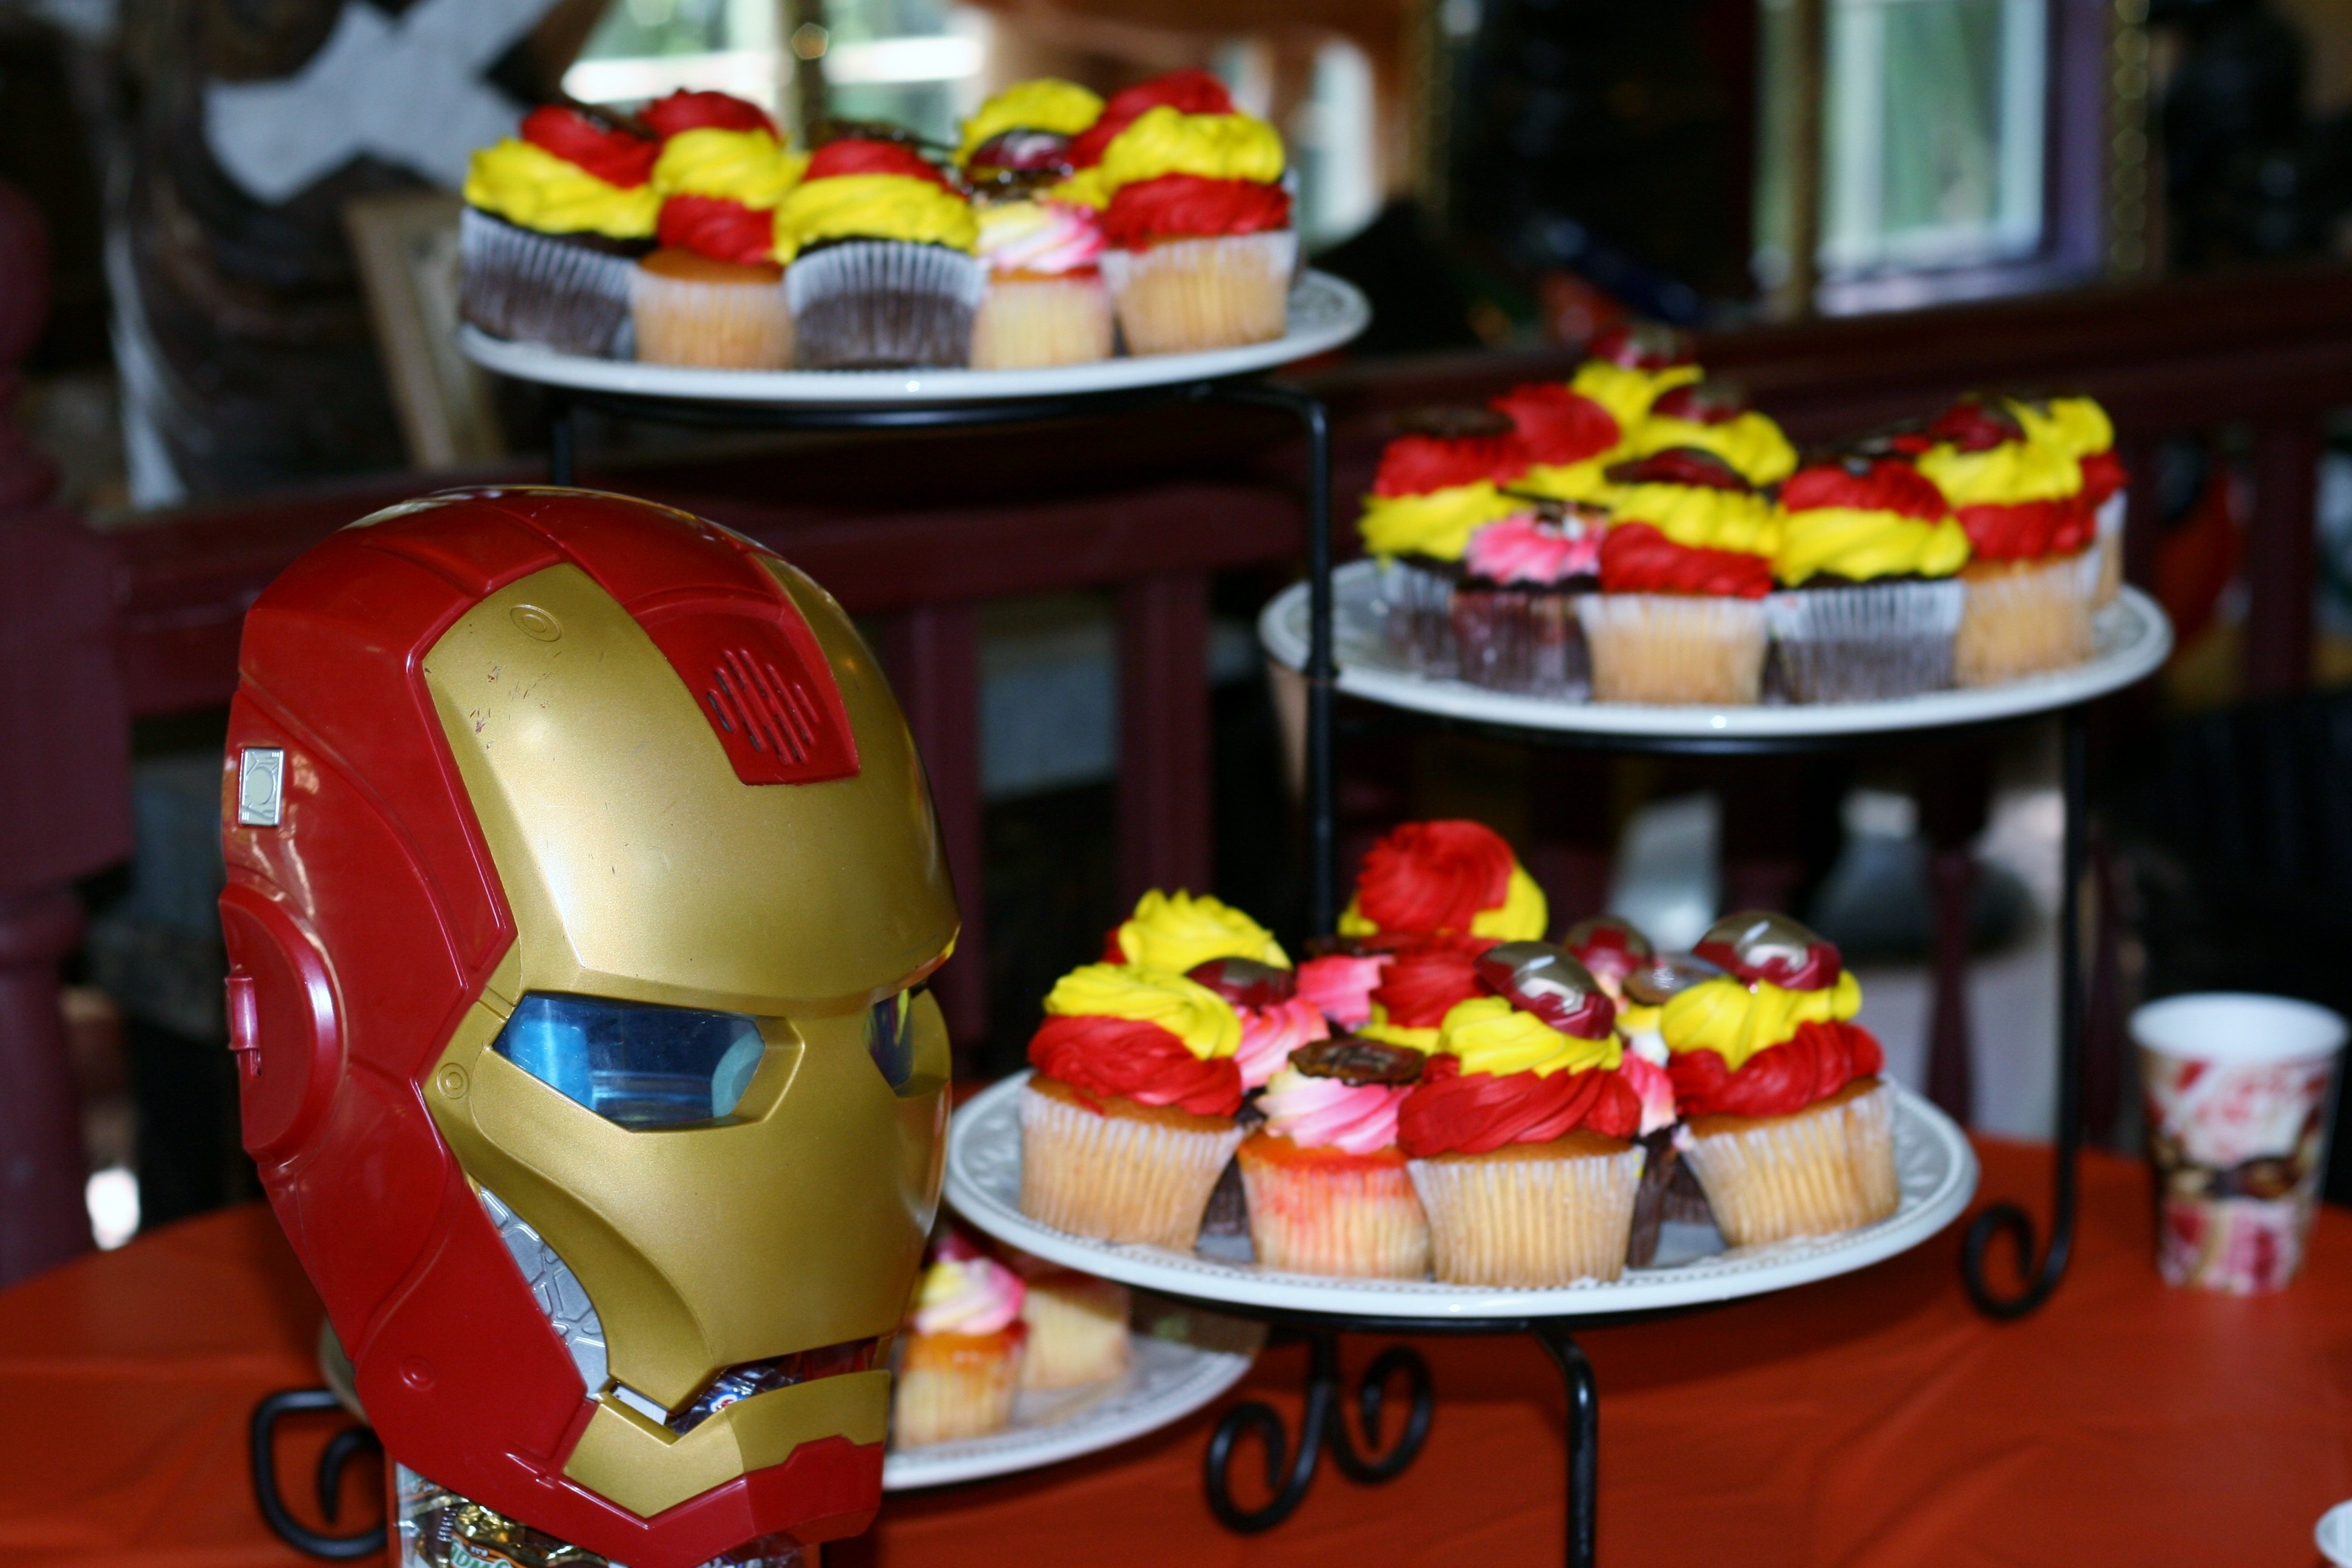 10 Fabulous Iron Man Birthday Party Ideas video iron man 3 birthday party tips decorations dancing hotdogs 2022